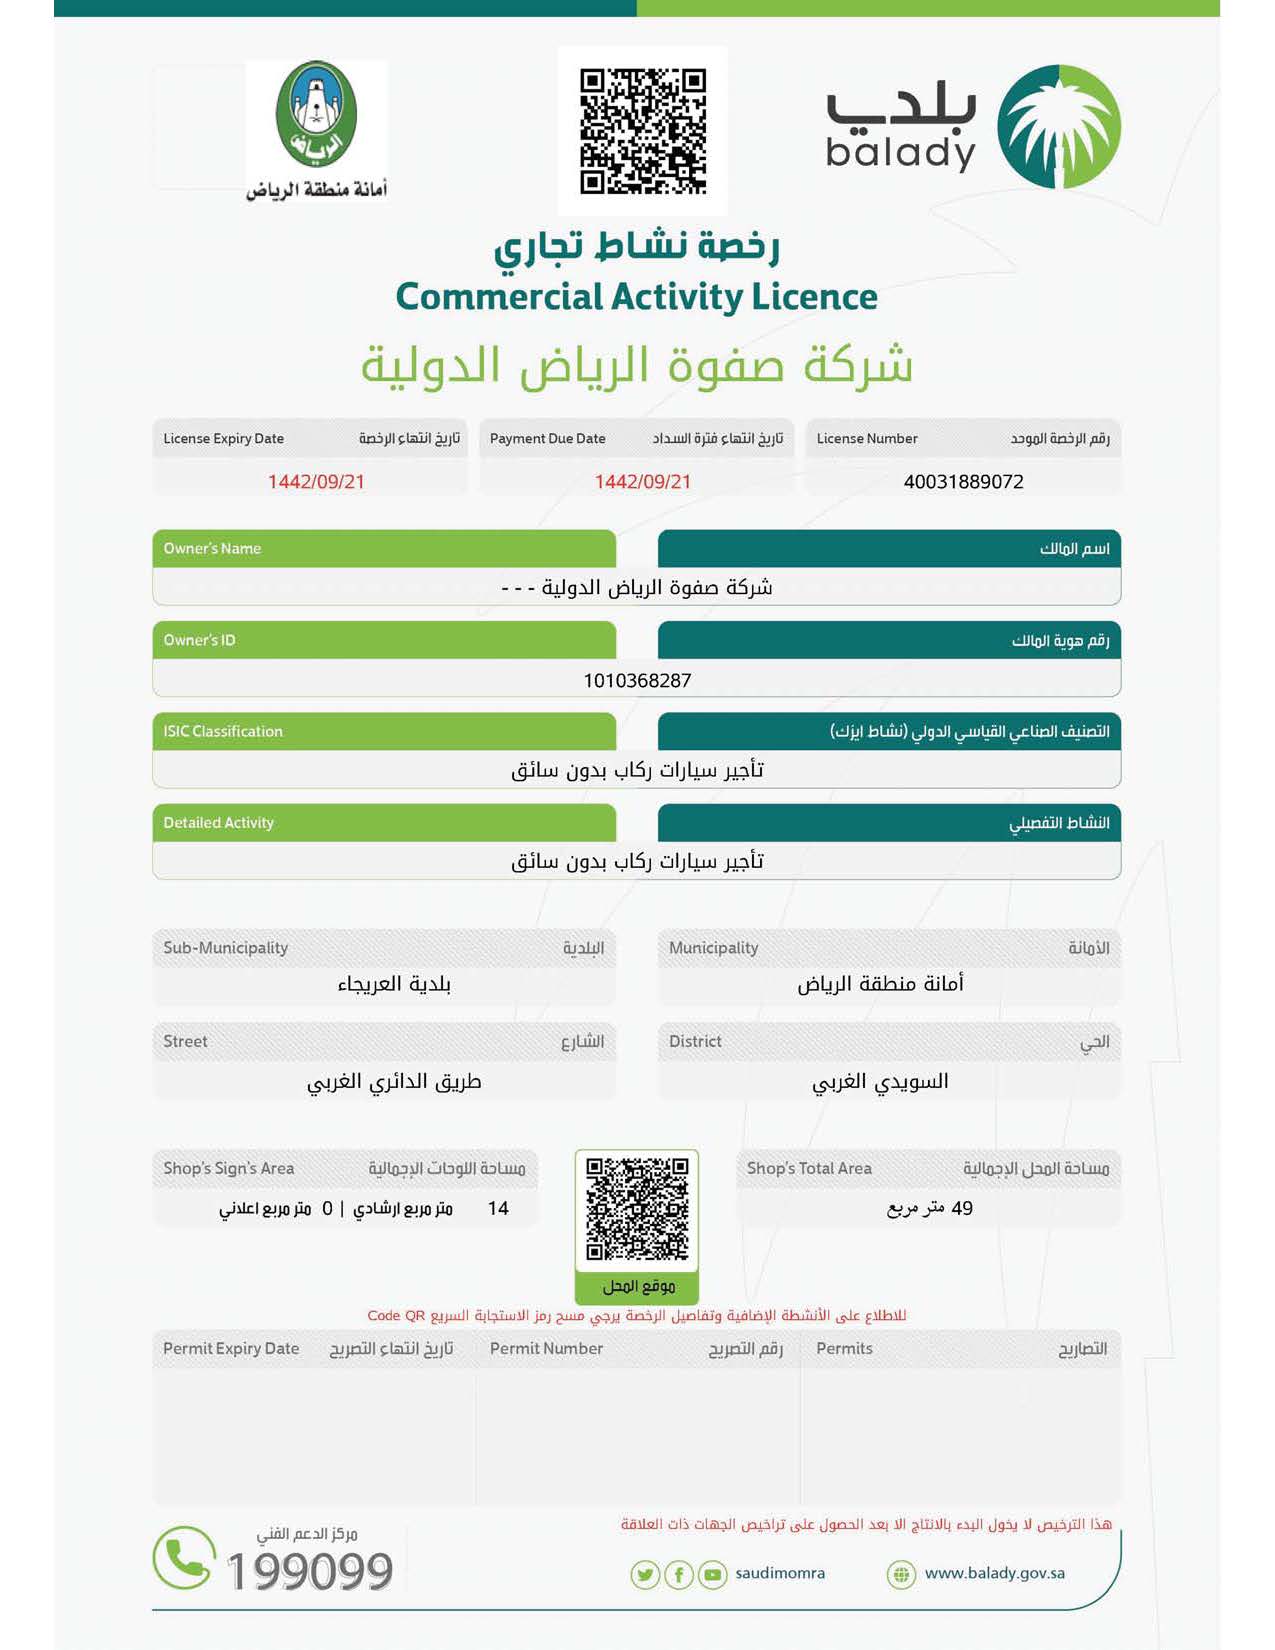 البلديات Page 16 One of the leading companies and a significant number in all its fields